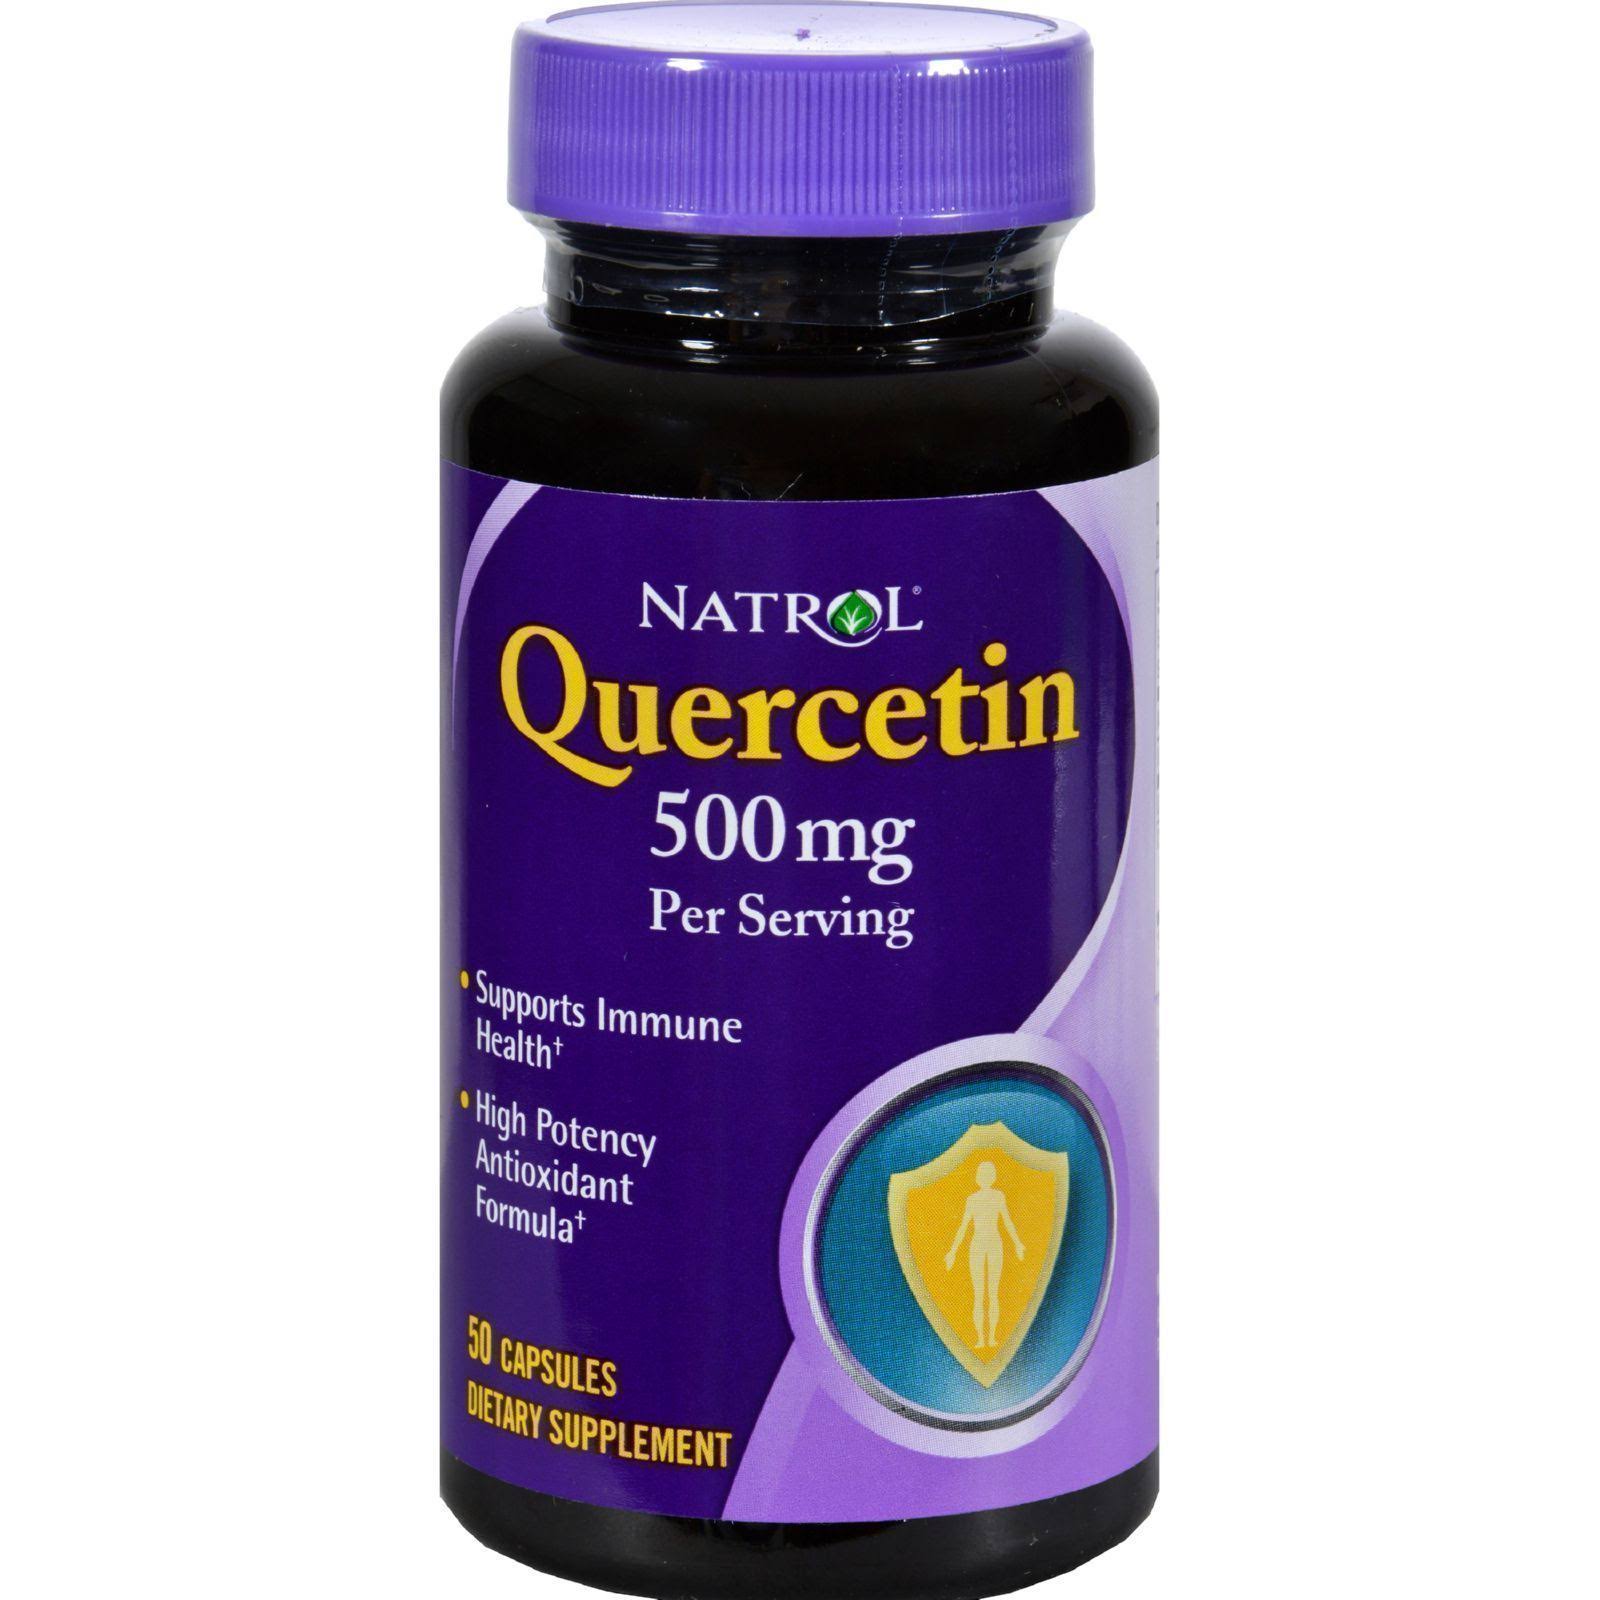 Natrol Quercetin Dietary Supplements - 50 Capsules